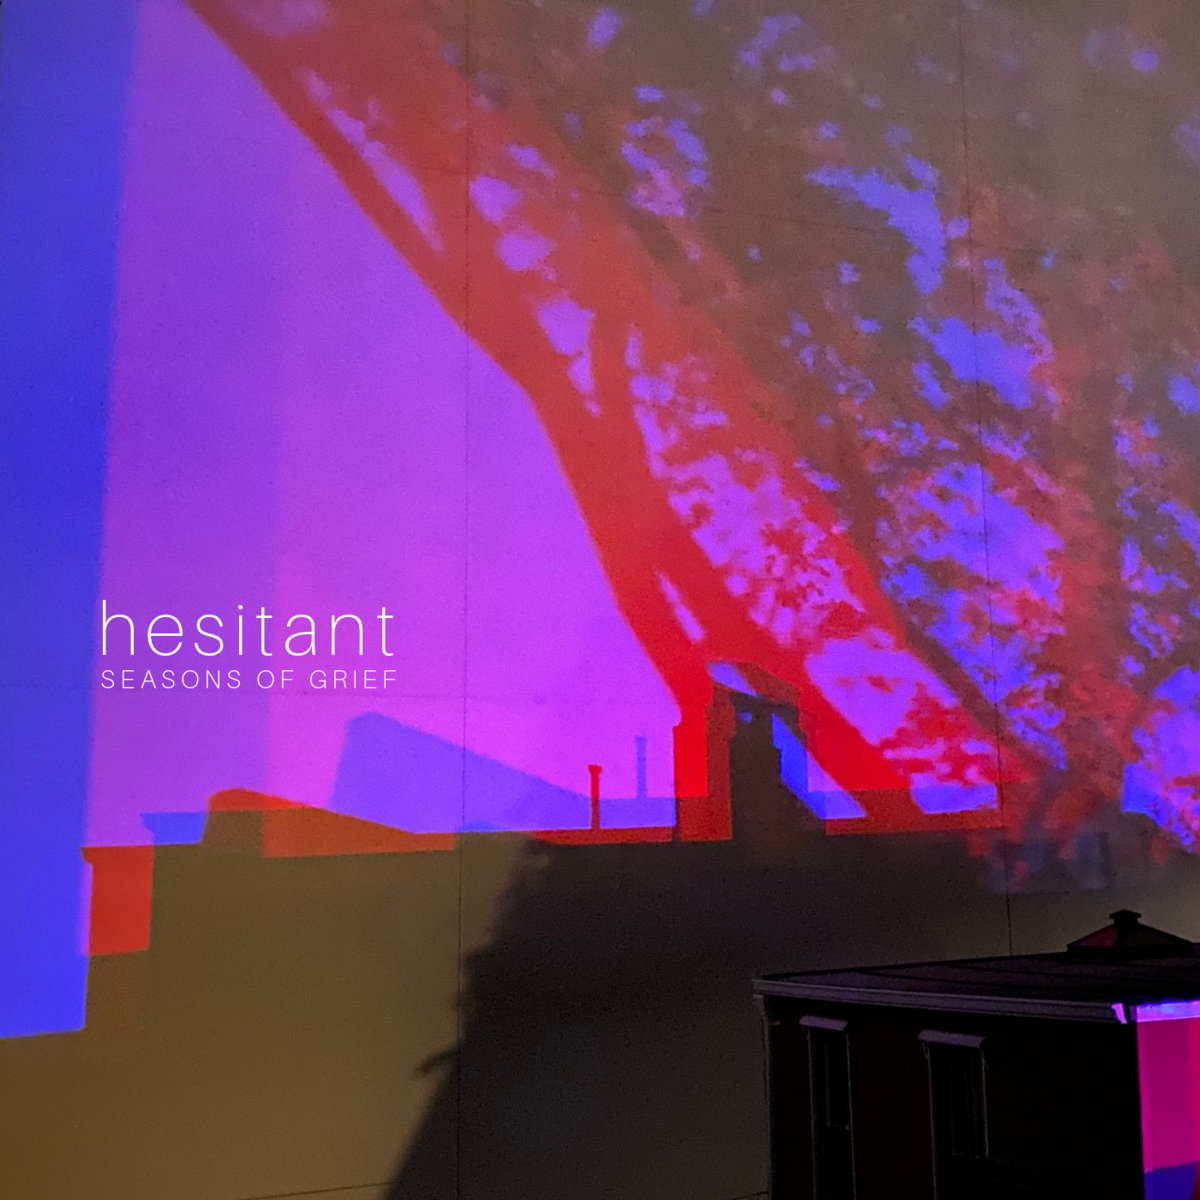 Hesitant’s recent album, seasons of grief